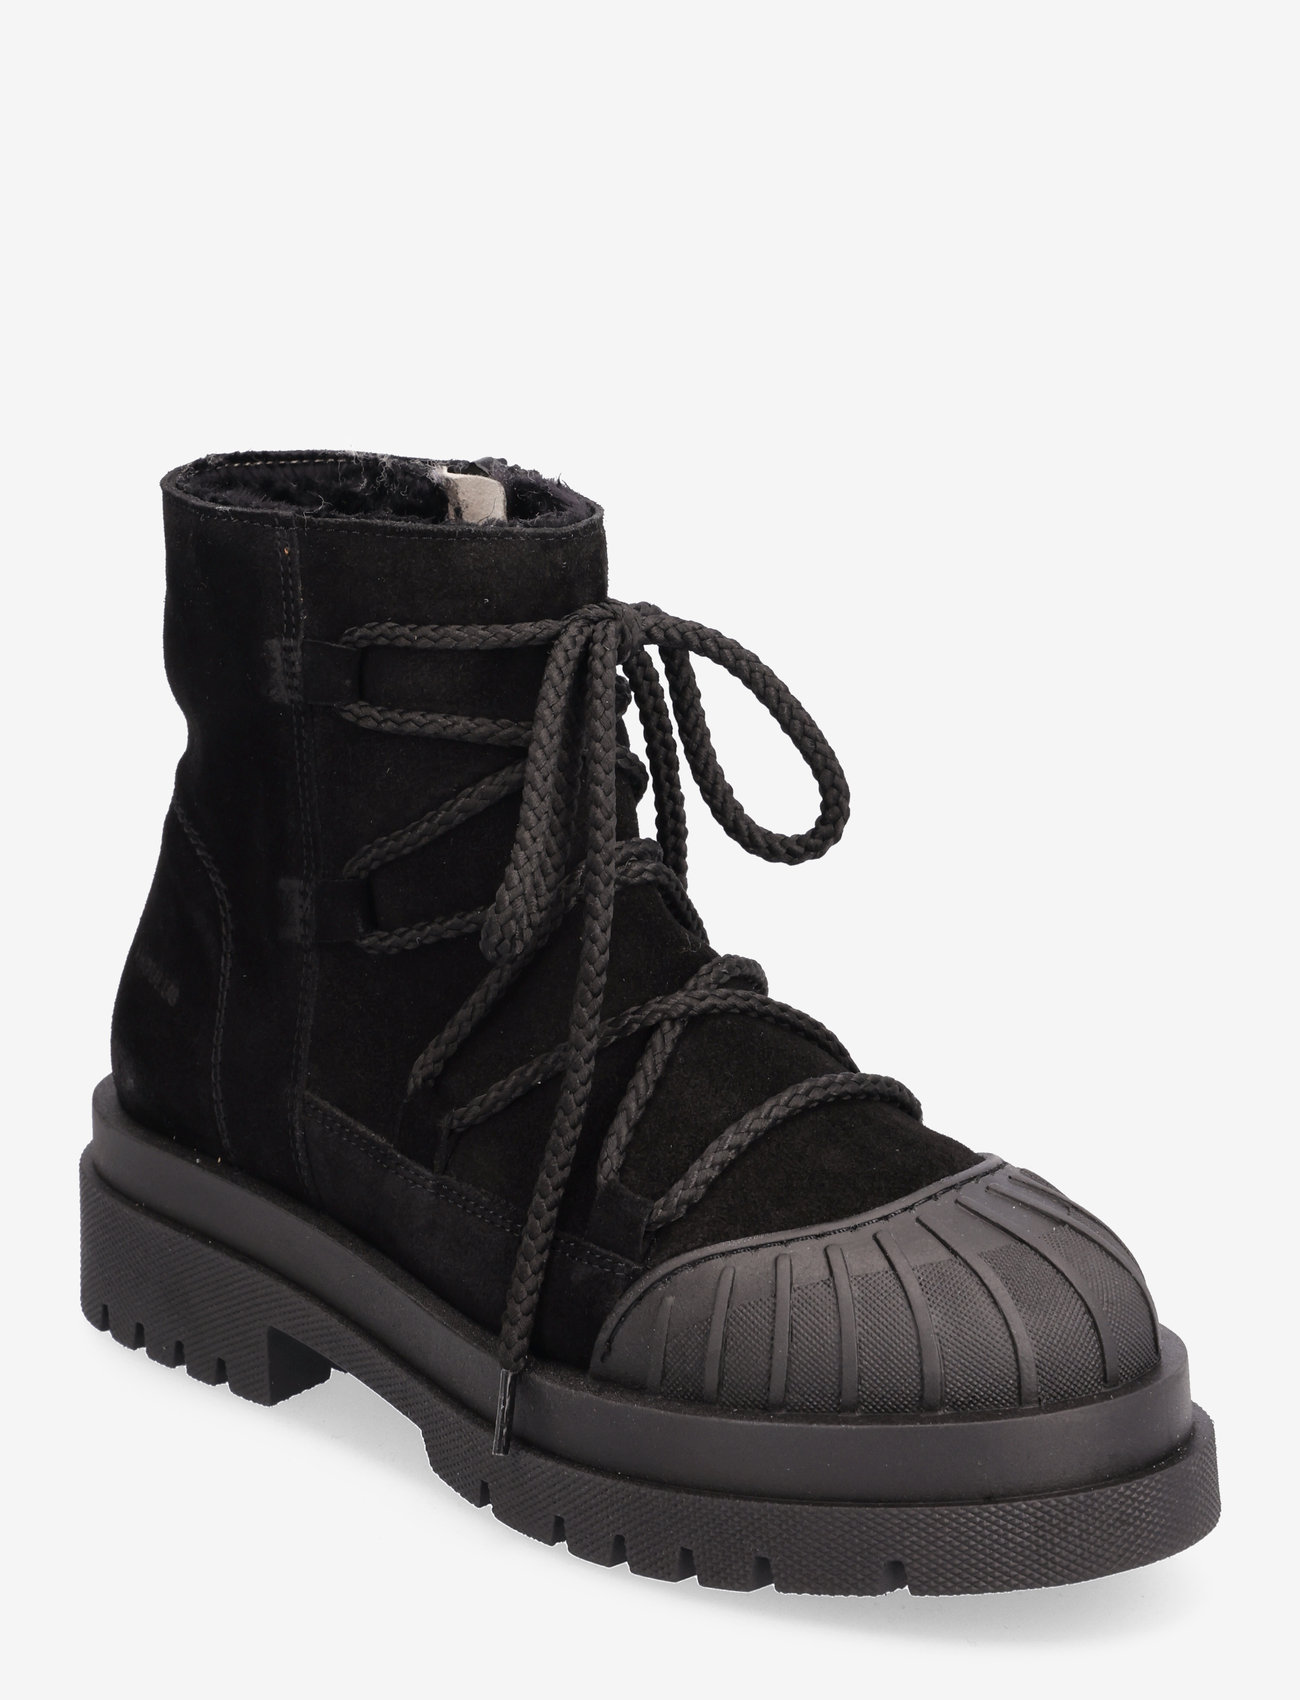 ANGULUS - Boots - flat - veterlaarzen - 1163/2014 black/black lamb woo - 0